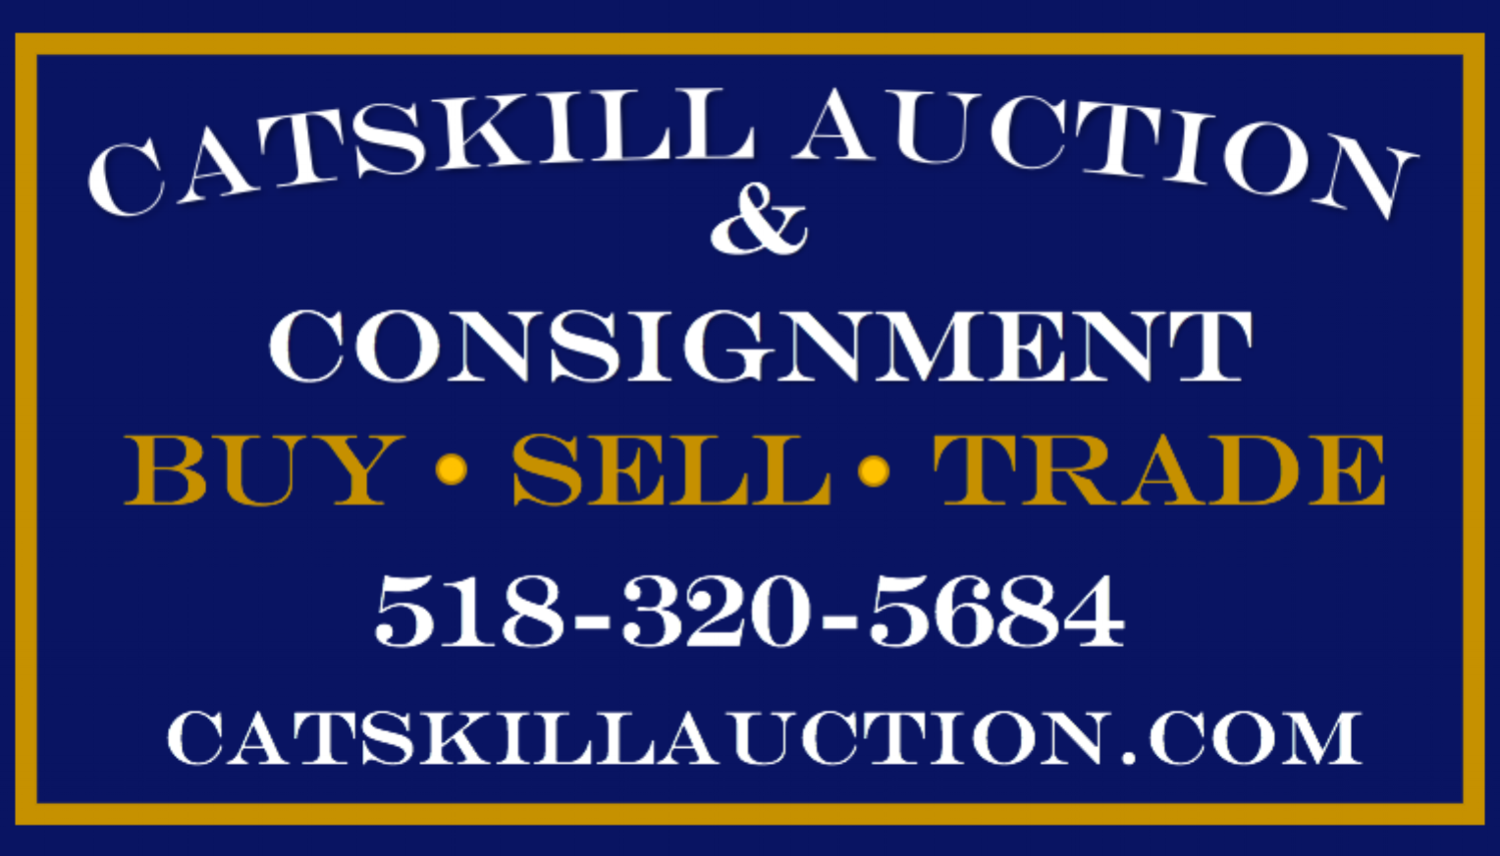 Catskill Auction